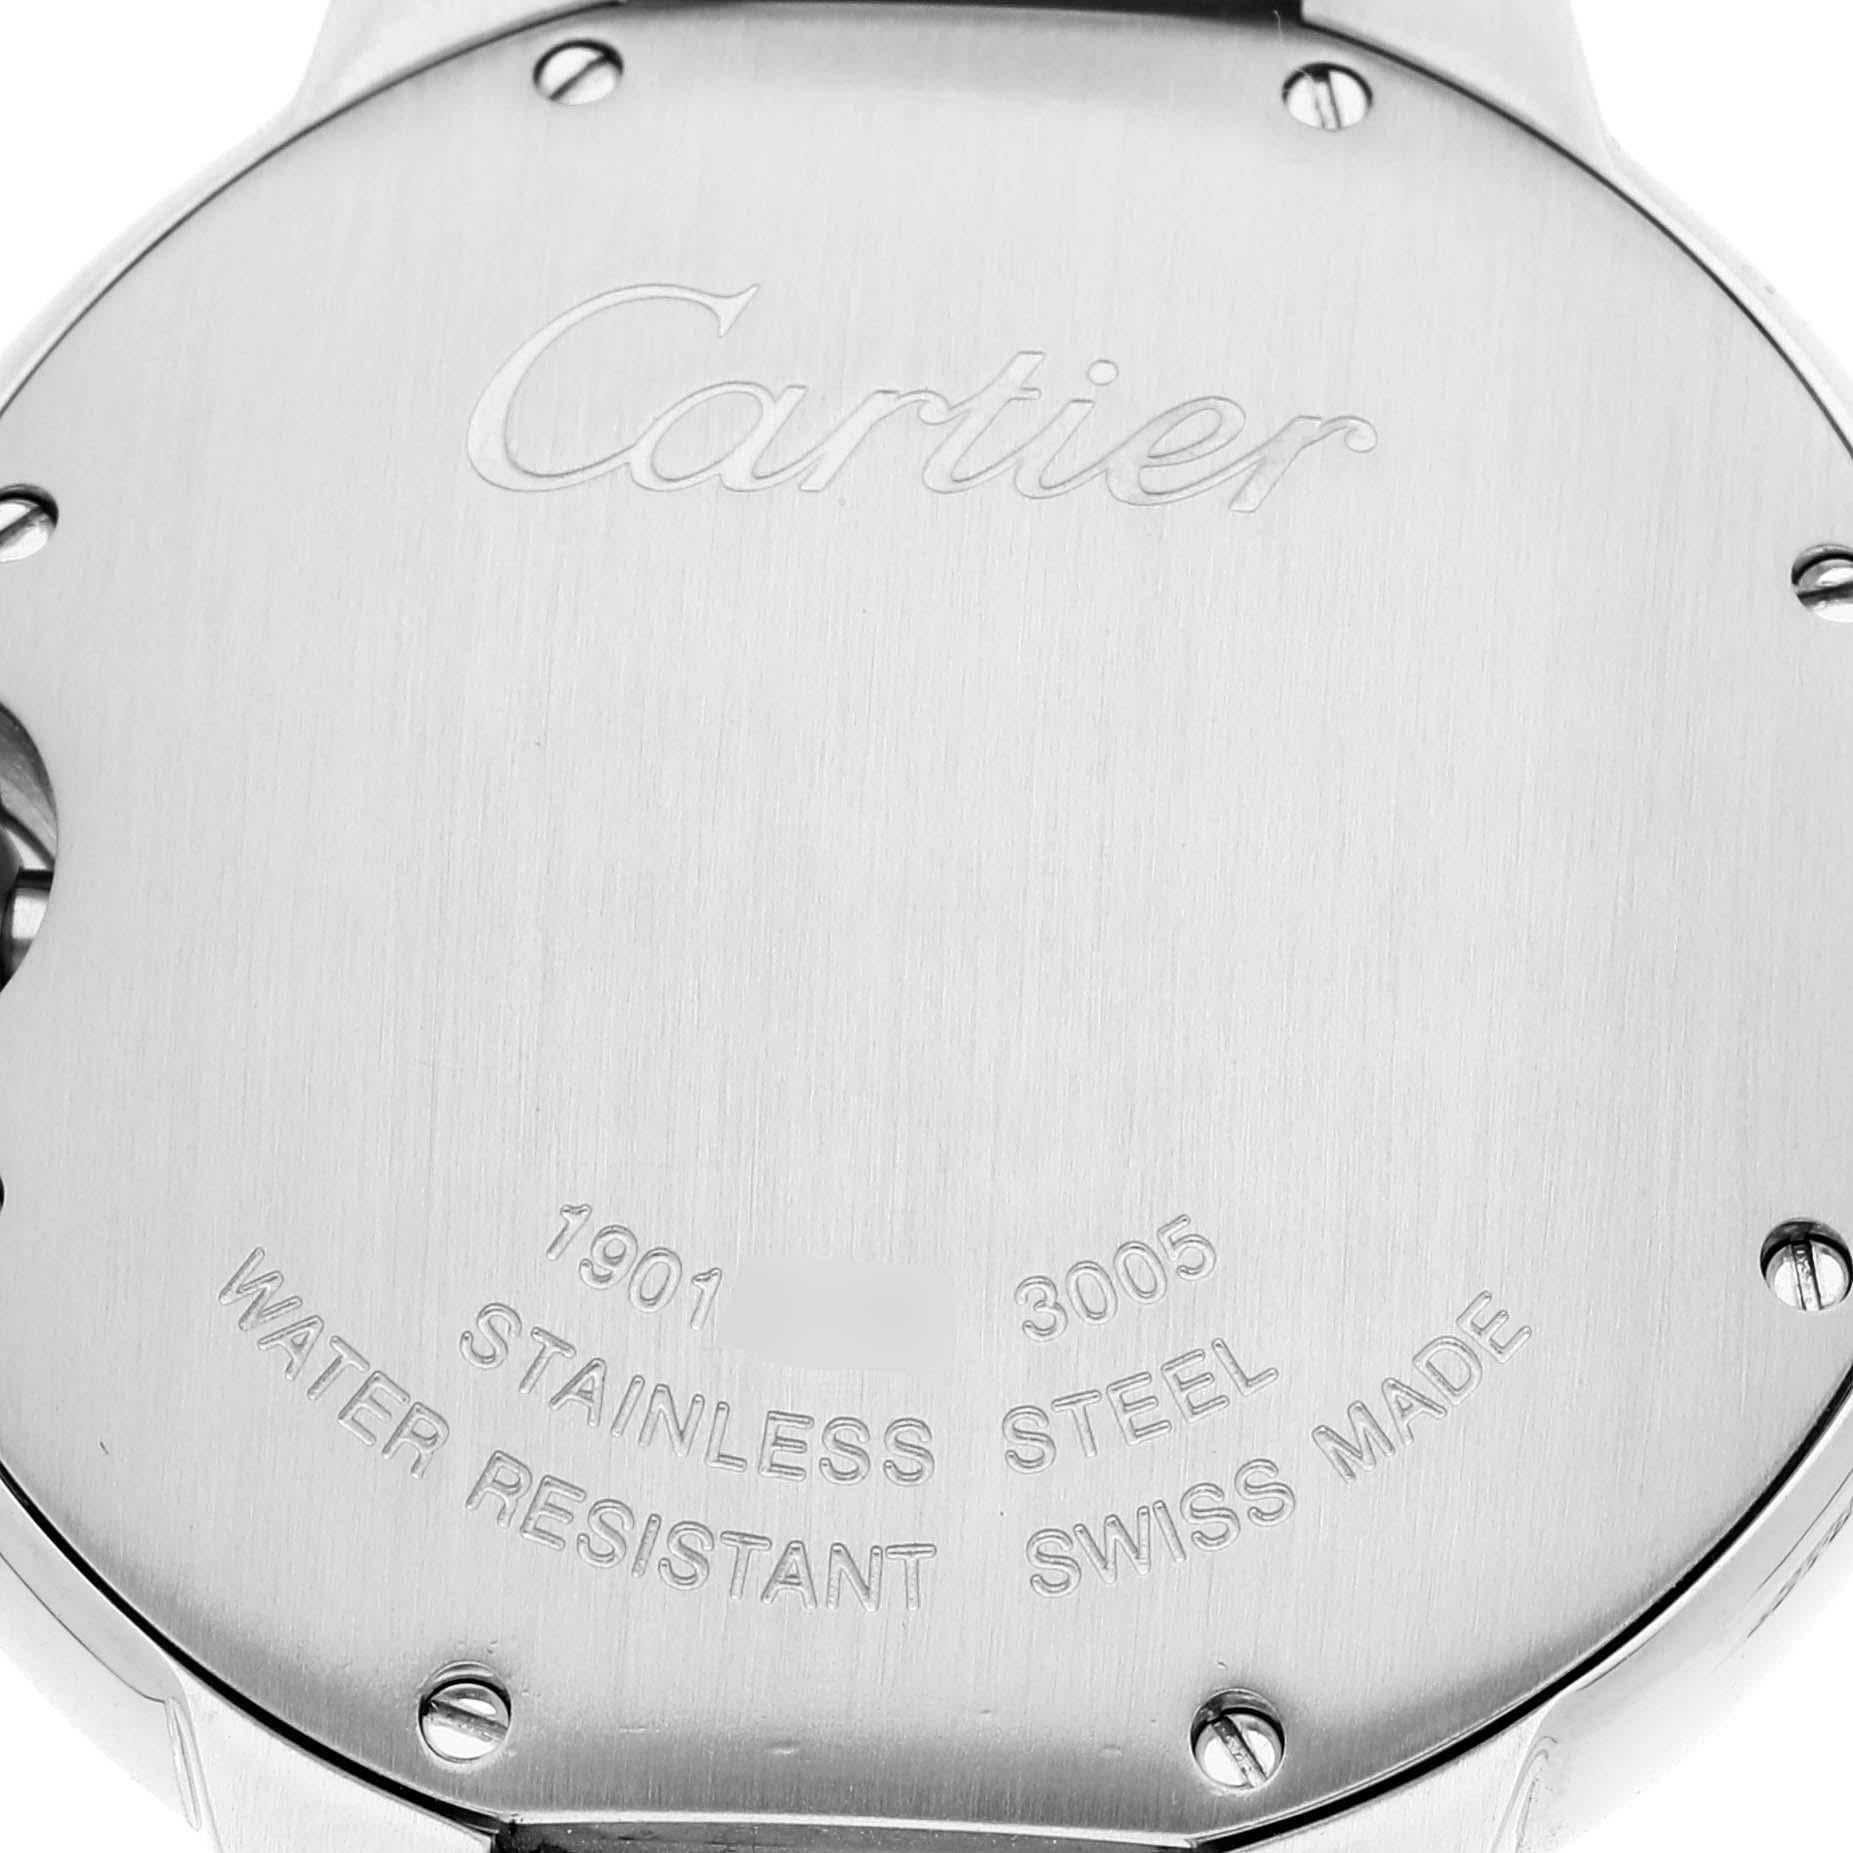 Cartier Ballon Bleu 36mm Silver Guilloche Dial Steel Mens Watch W69011Z4 For Sale 2